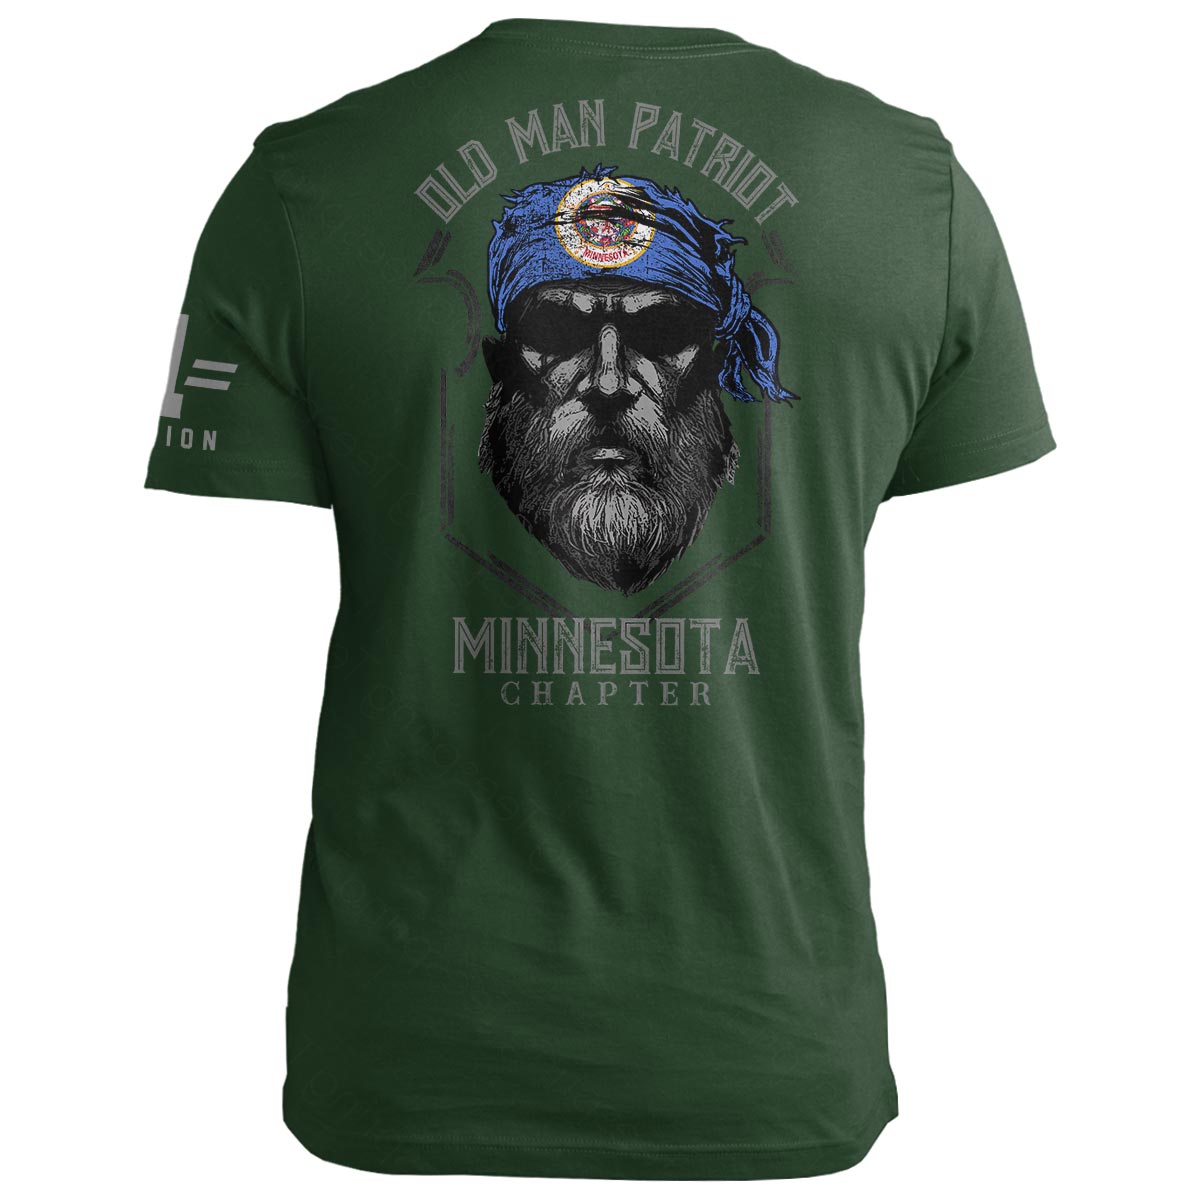 Minnesota Old Man Patriot